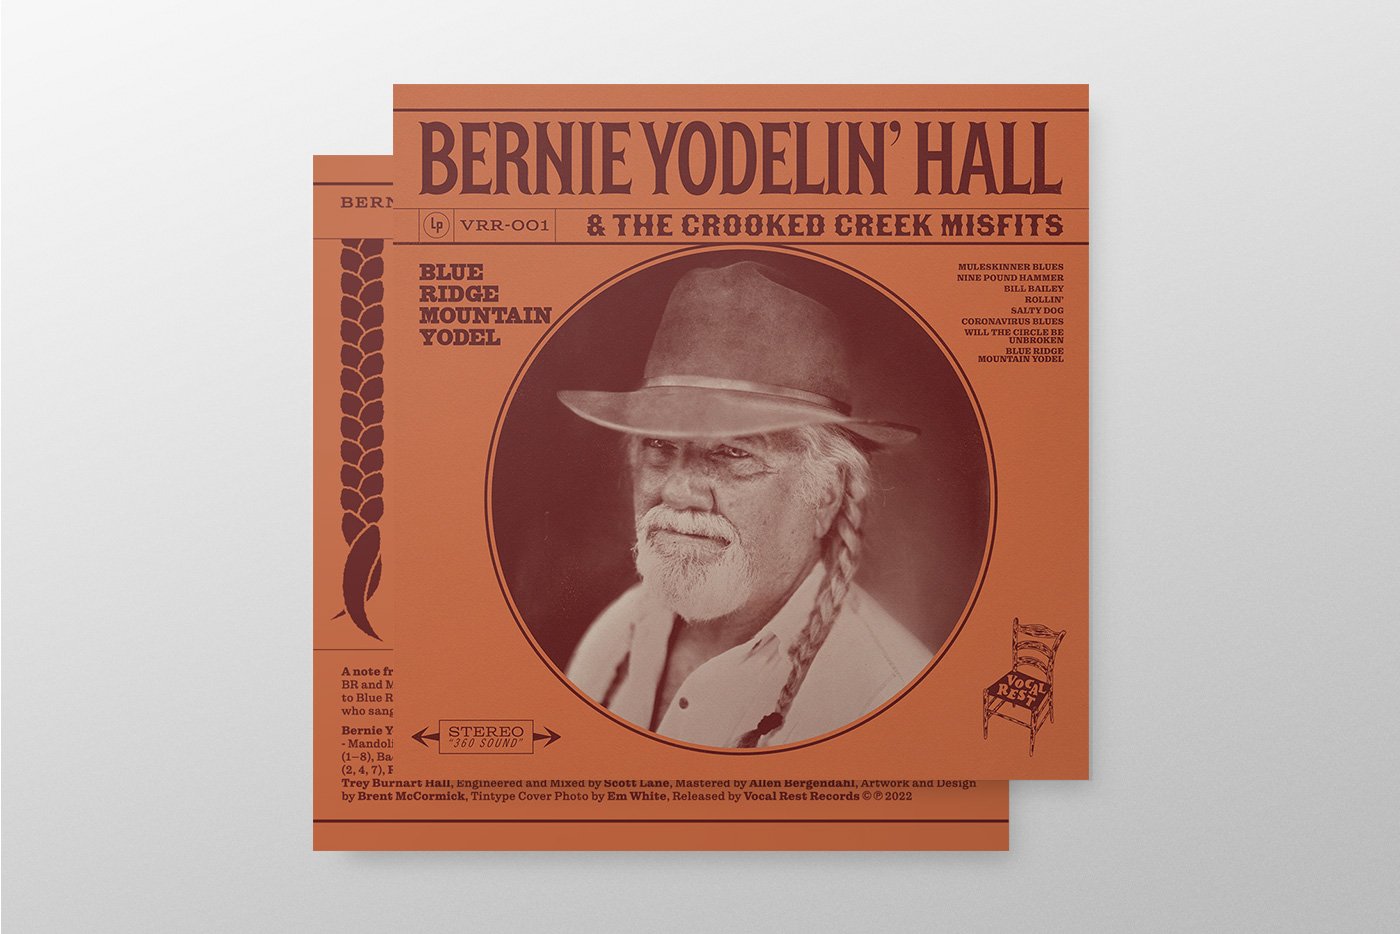 Bernie Yodelin’ Hall Album Artwork